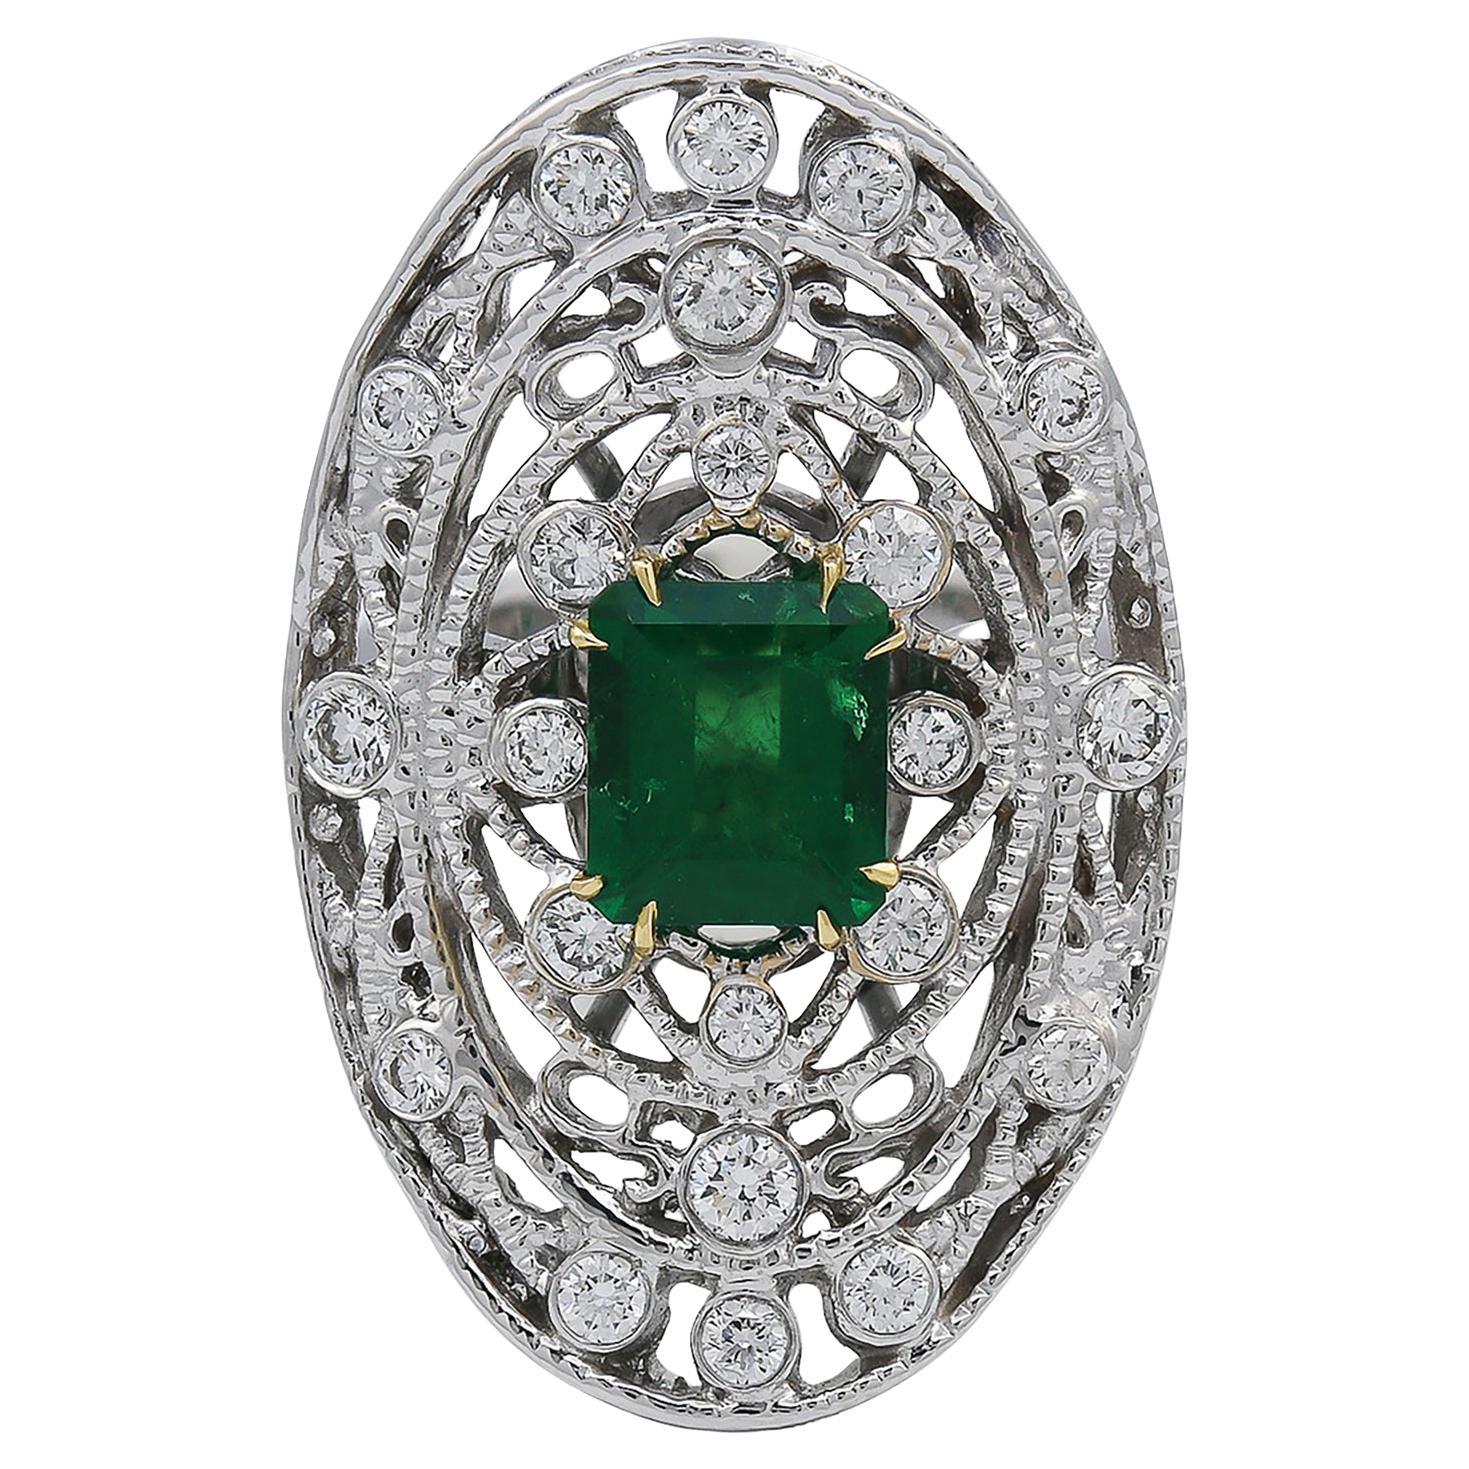 Spectra Fine Jewelry GRS Certified 2.18 Carat Colombian Emerald Diamond Ring For Sale